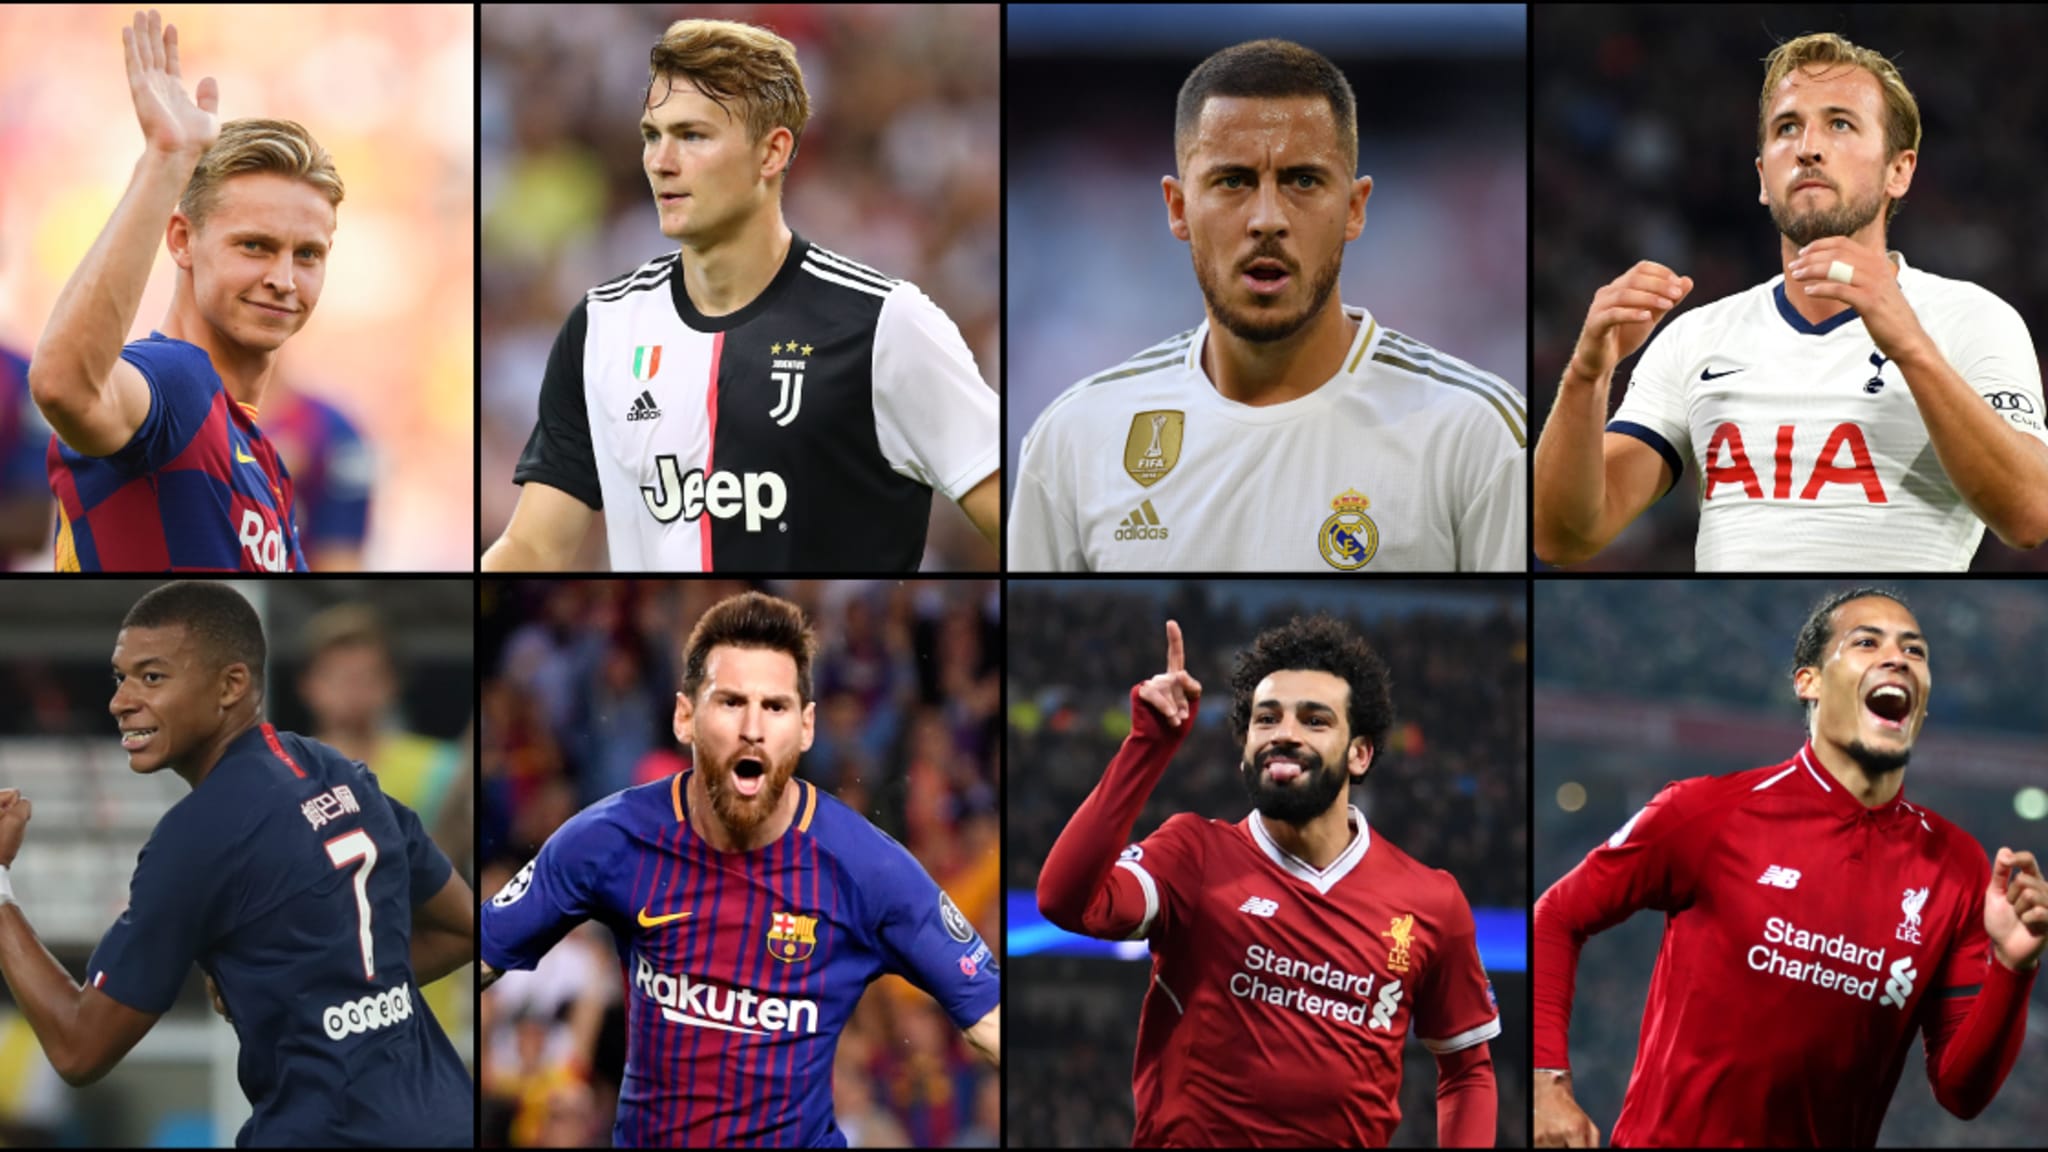 The Best Fifa Men S Player 2019 Nominees - Best Football Player 2019 - HD Wallpaper 